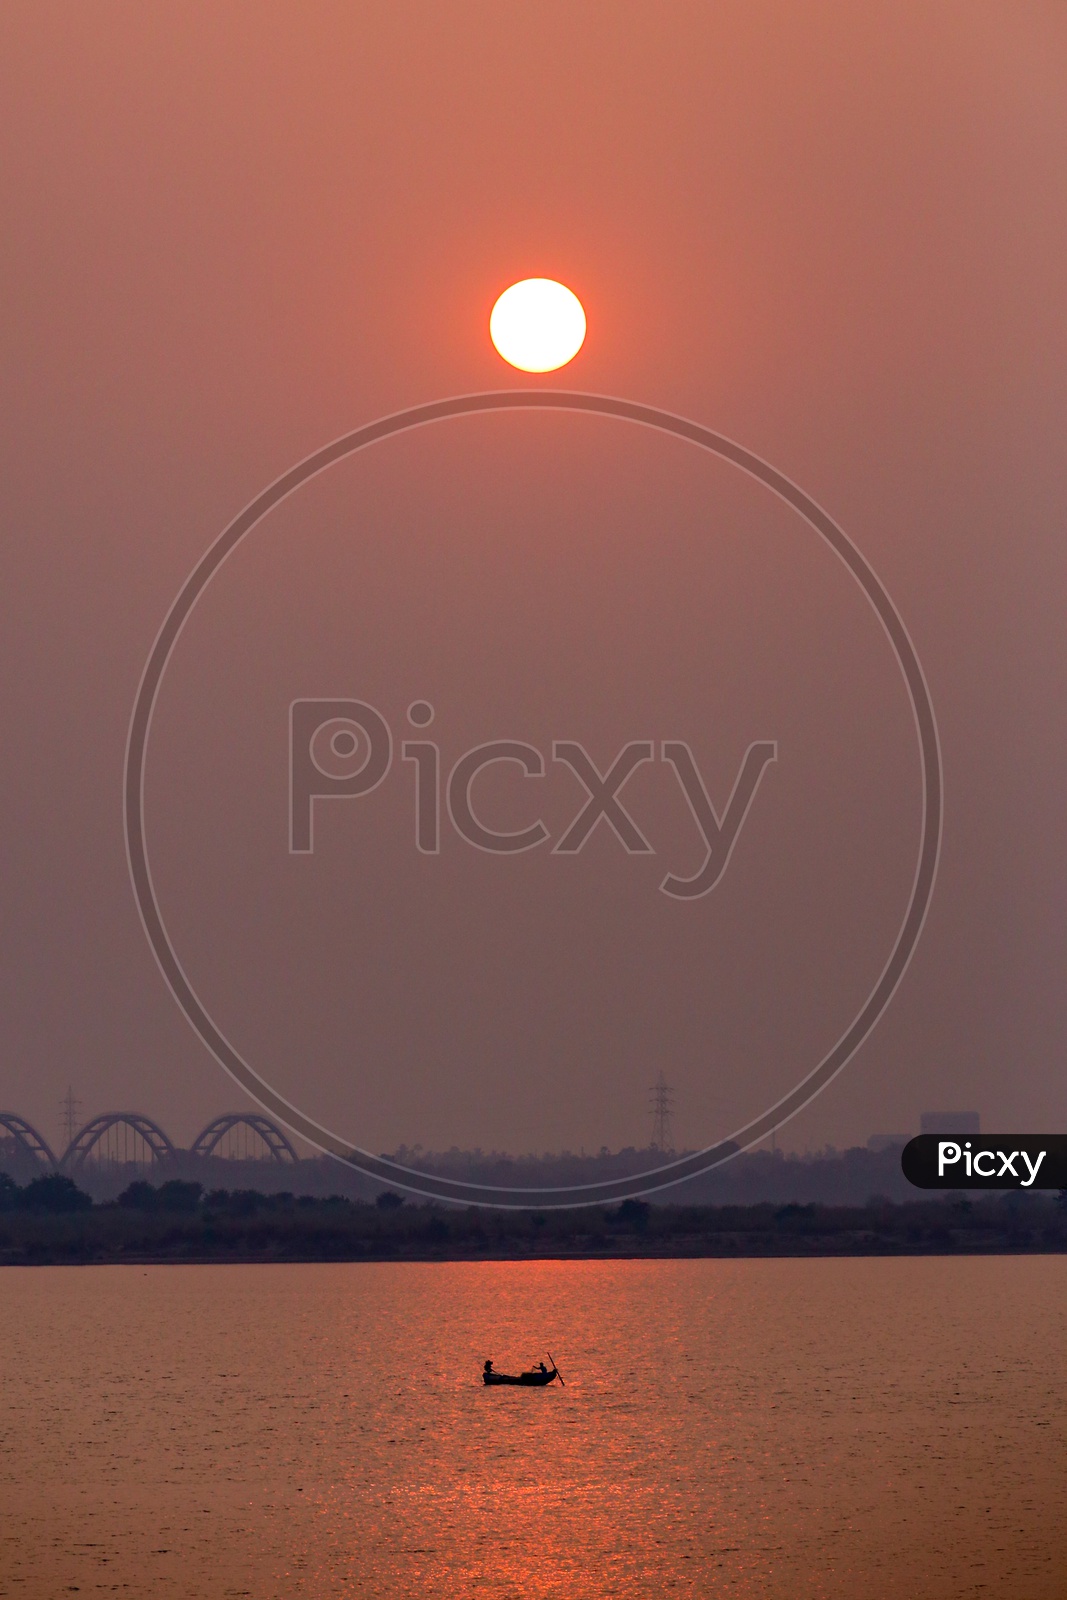 Rajahmundry Arch Bridge With Sunset Bright Round Sun in Sky